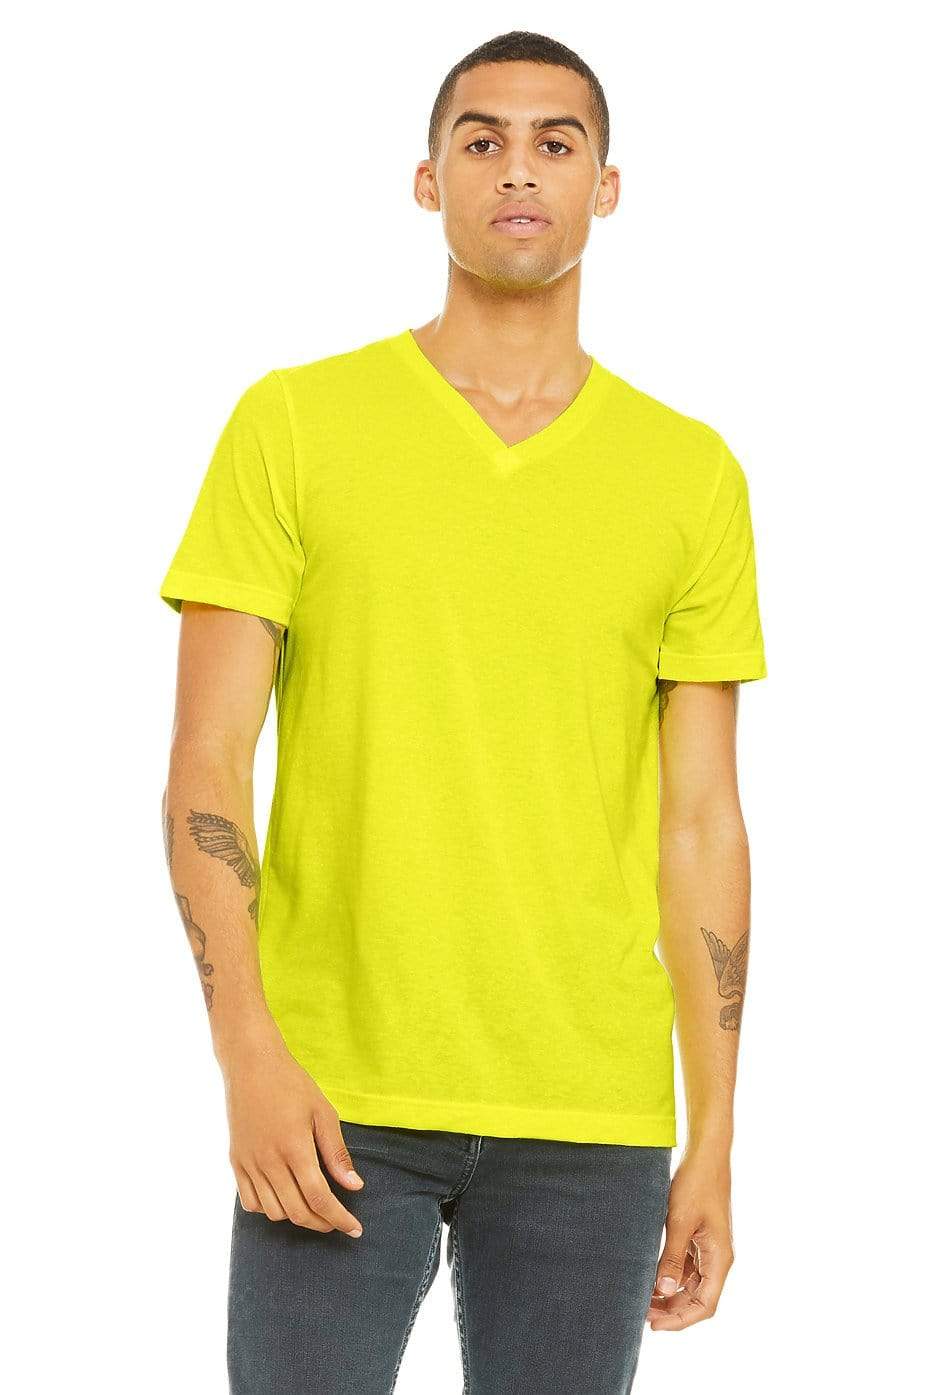 Grooveman Music T Shirt XS / Neon Yellow Jersey Short Sleeve V-Neck Tee